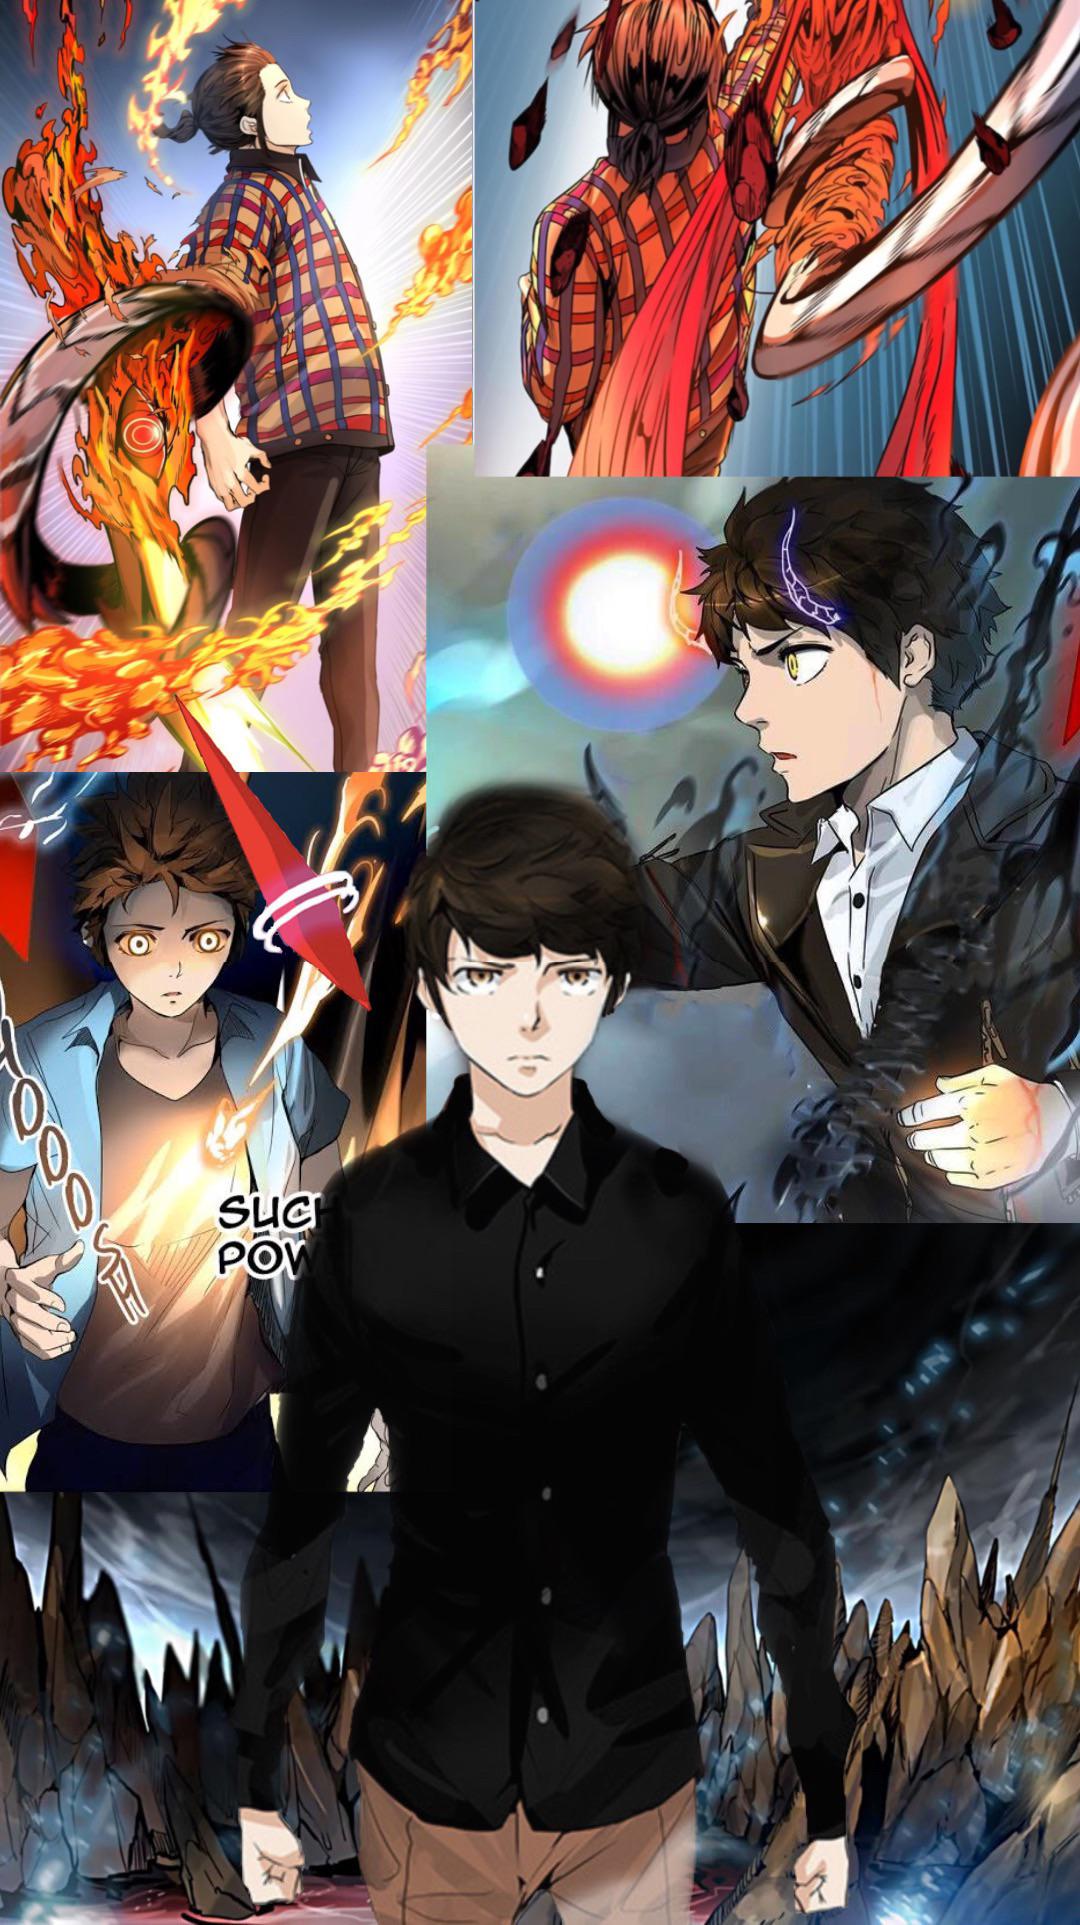 Twenty Fifth Baam Anime Wallpapers